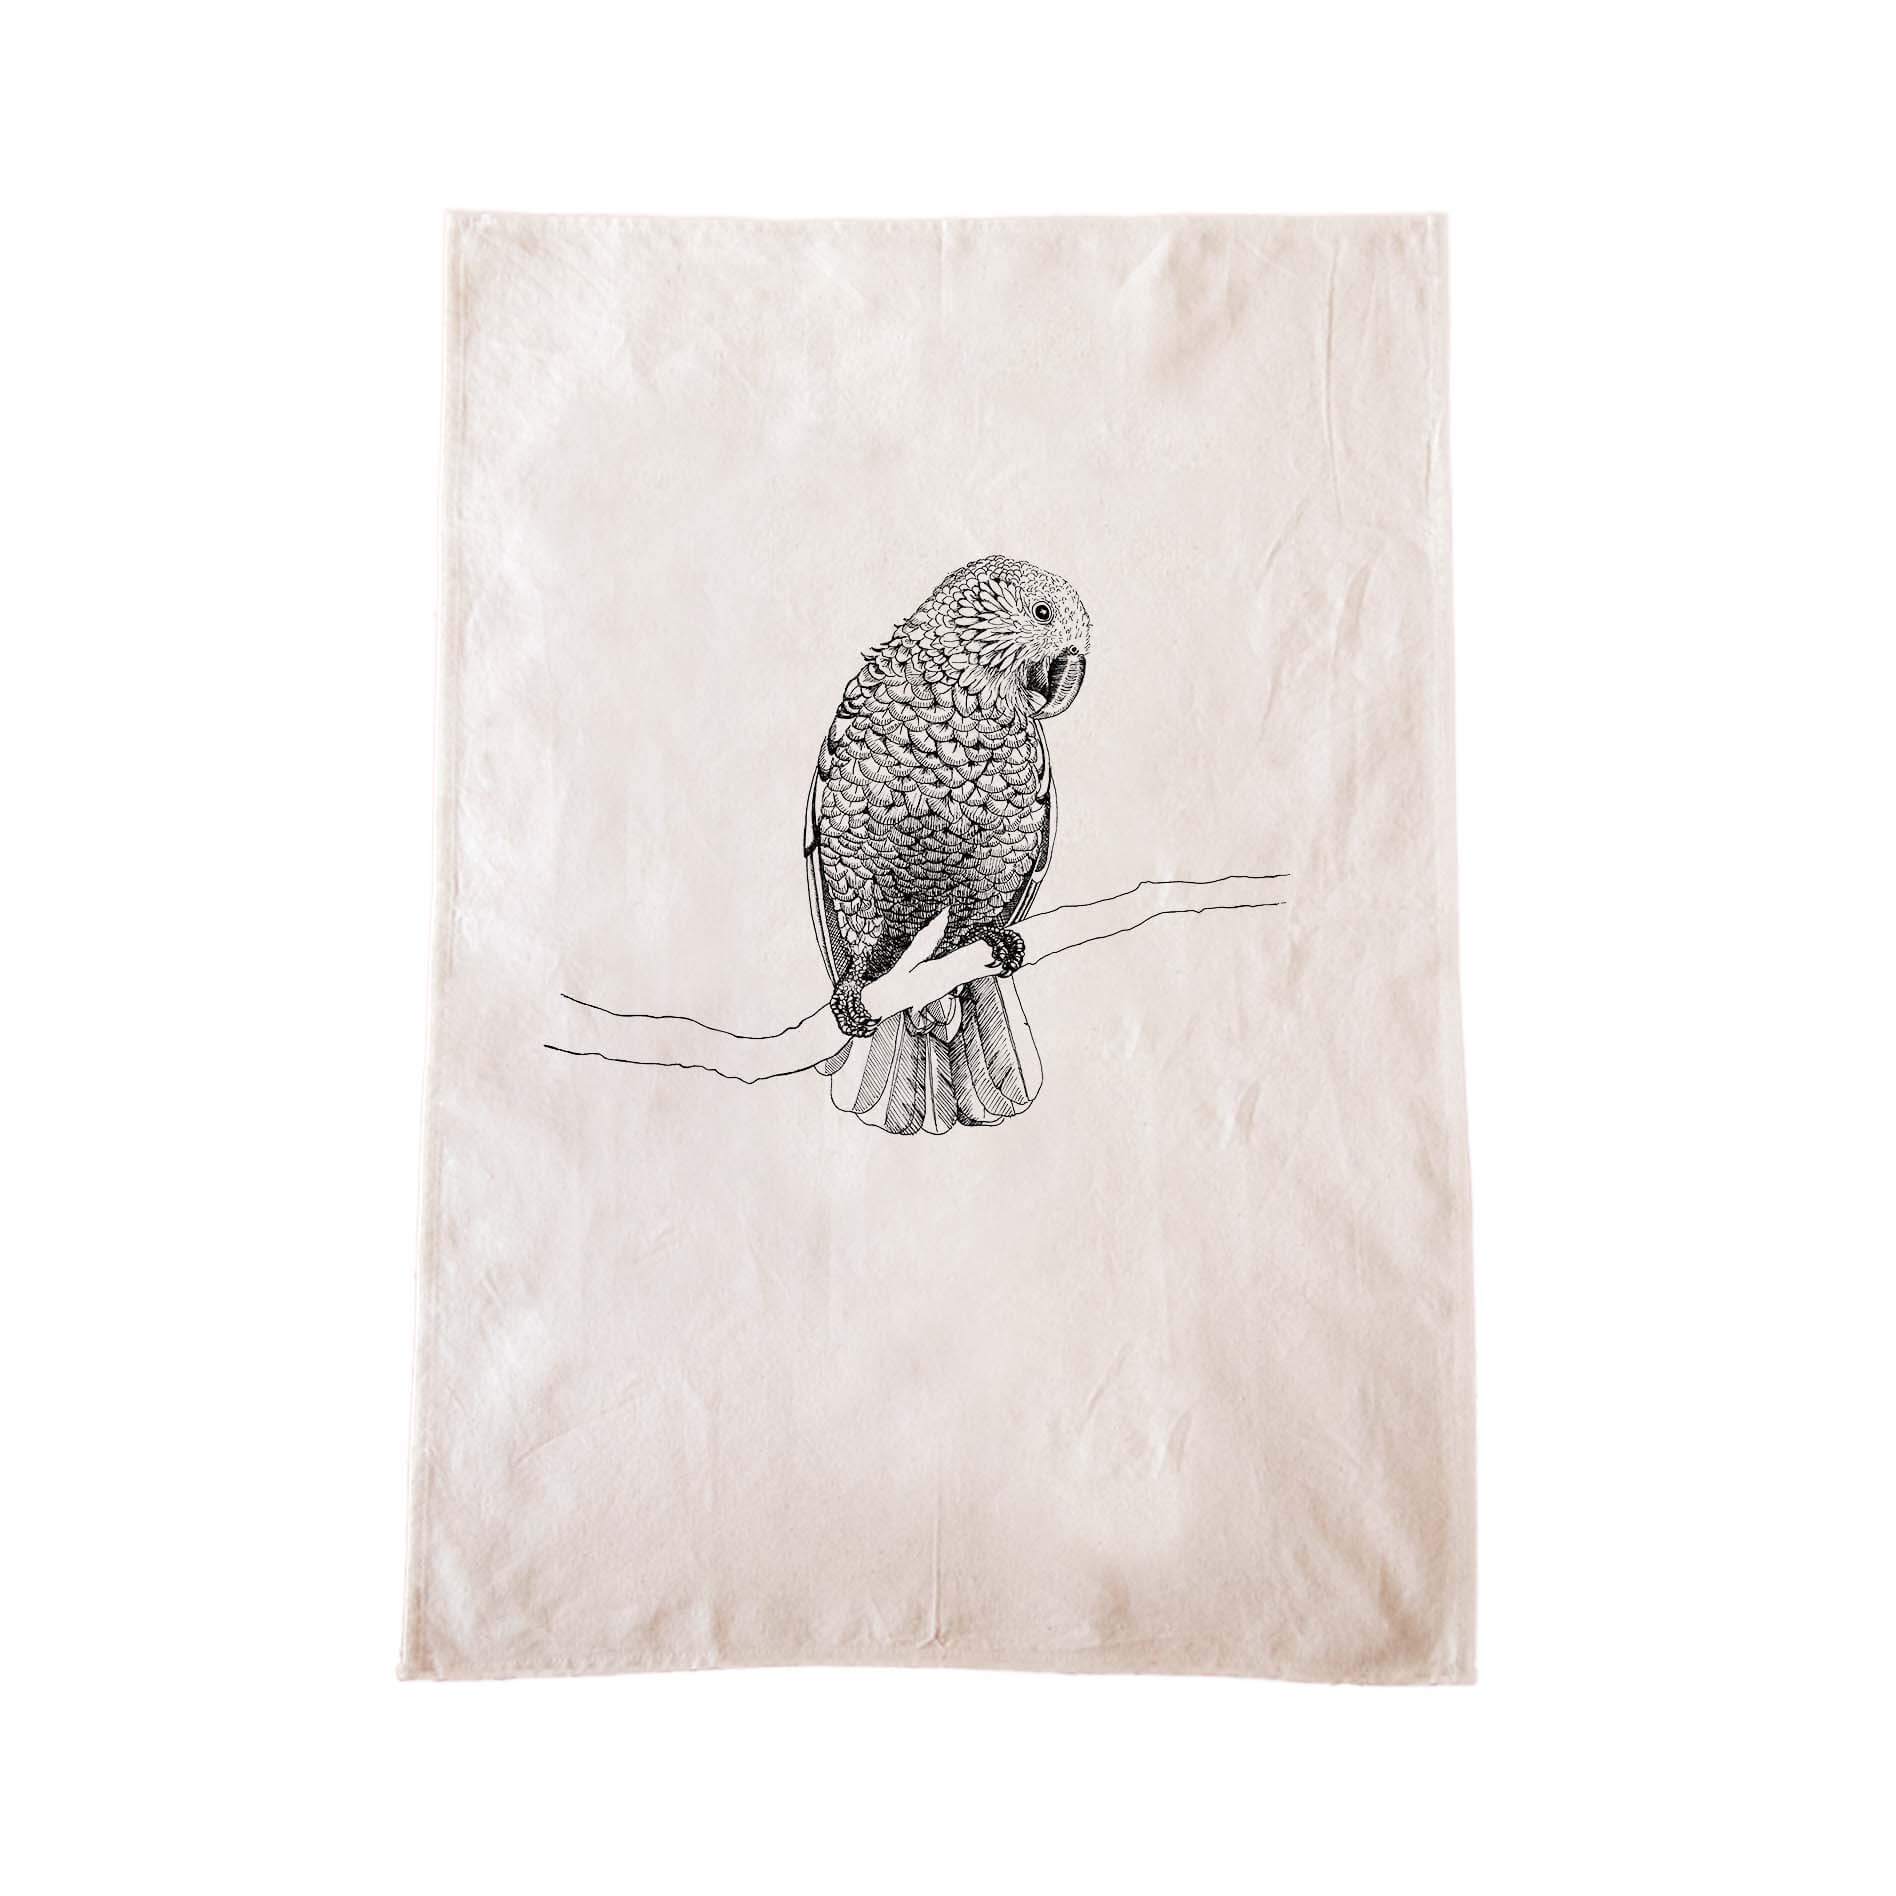 Off-white cotton tea towel with a screen printed Kaka design.